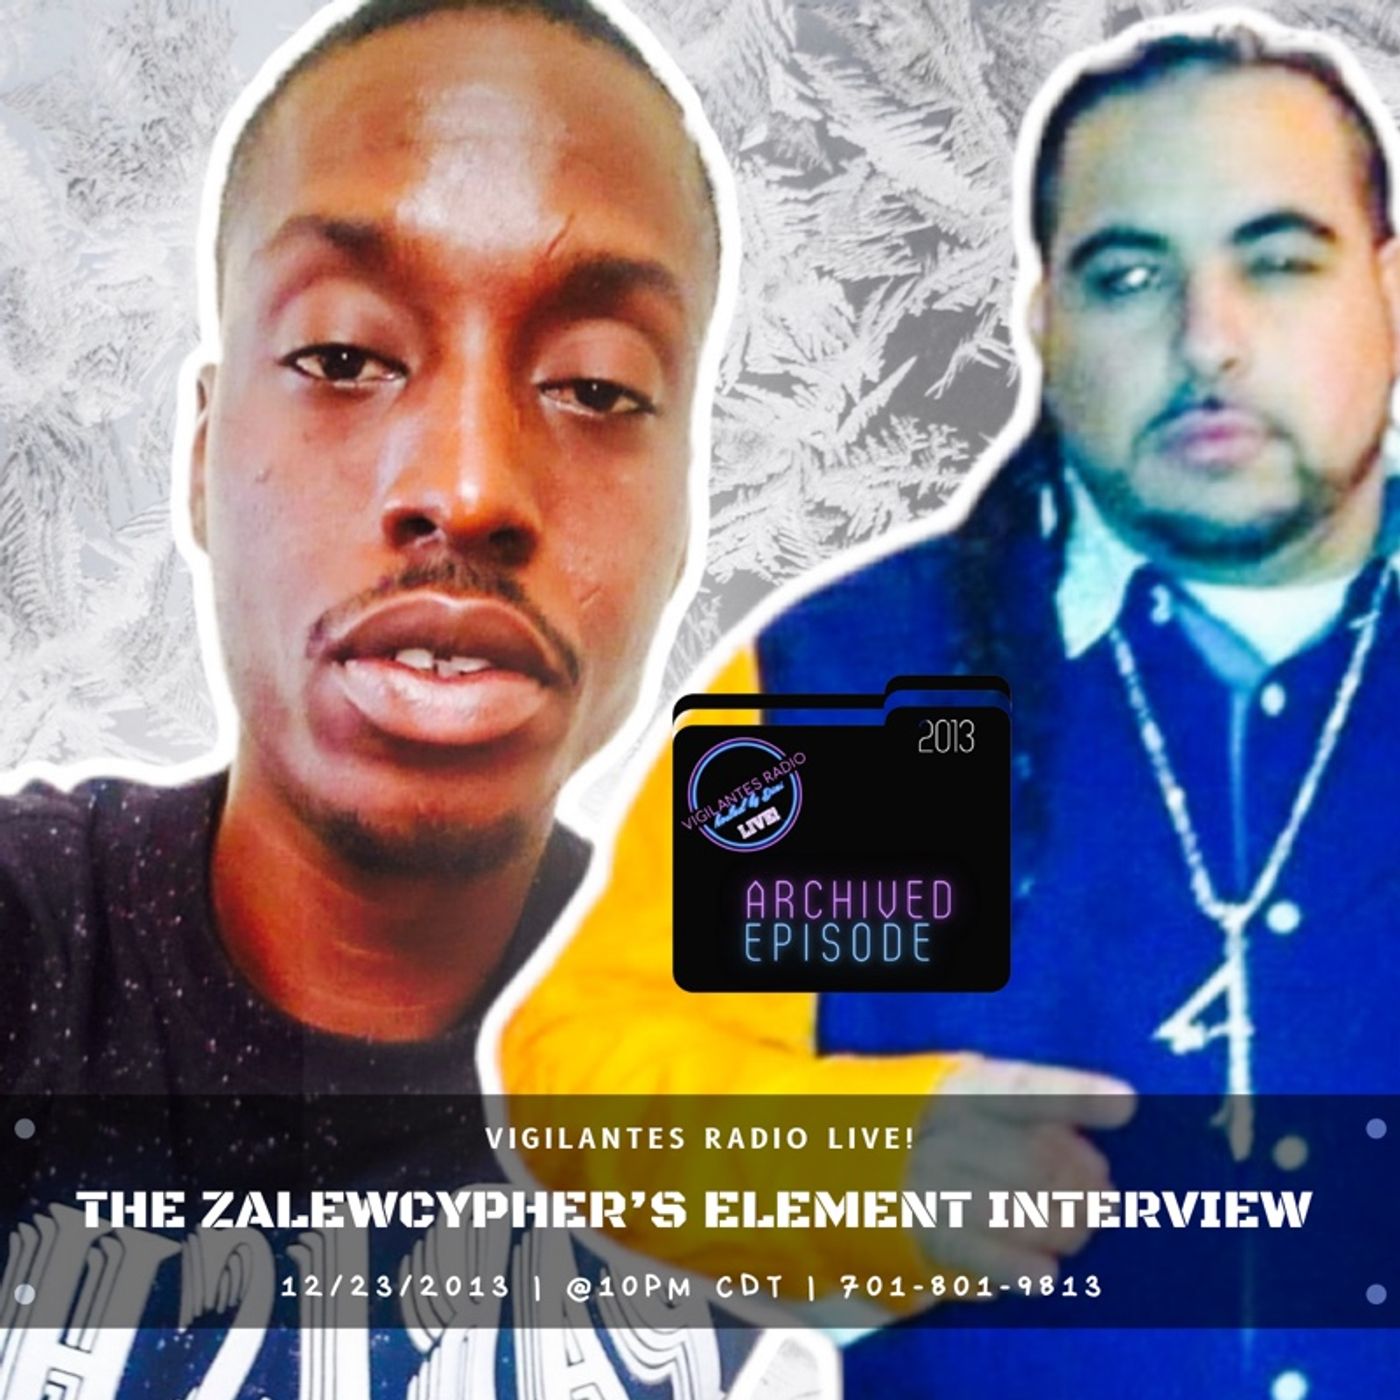 The ZaLewcypher’s Element Interview (Flashpoint Dec 2013). Image